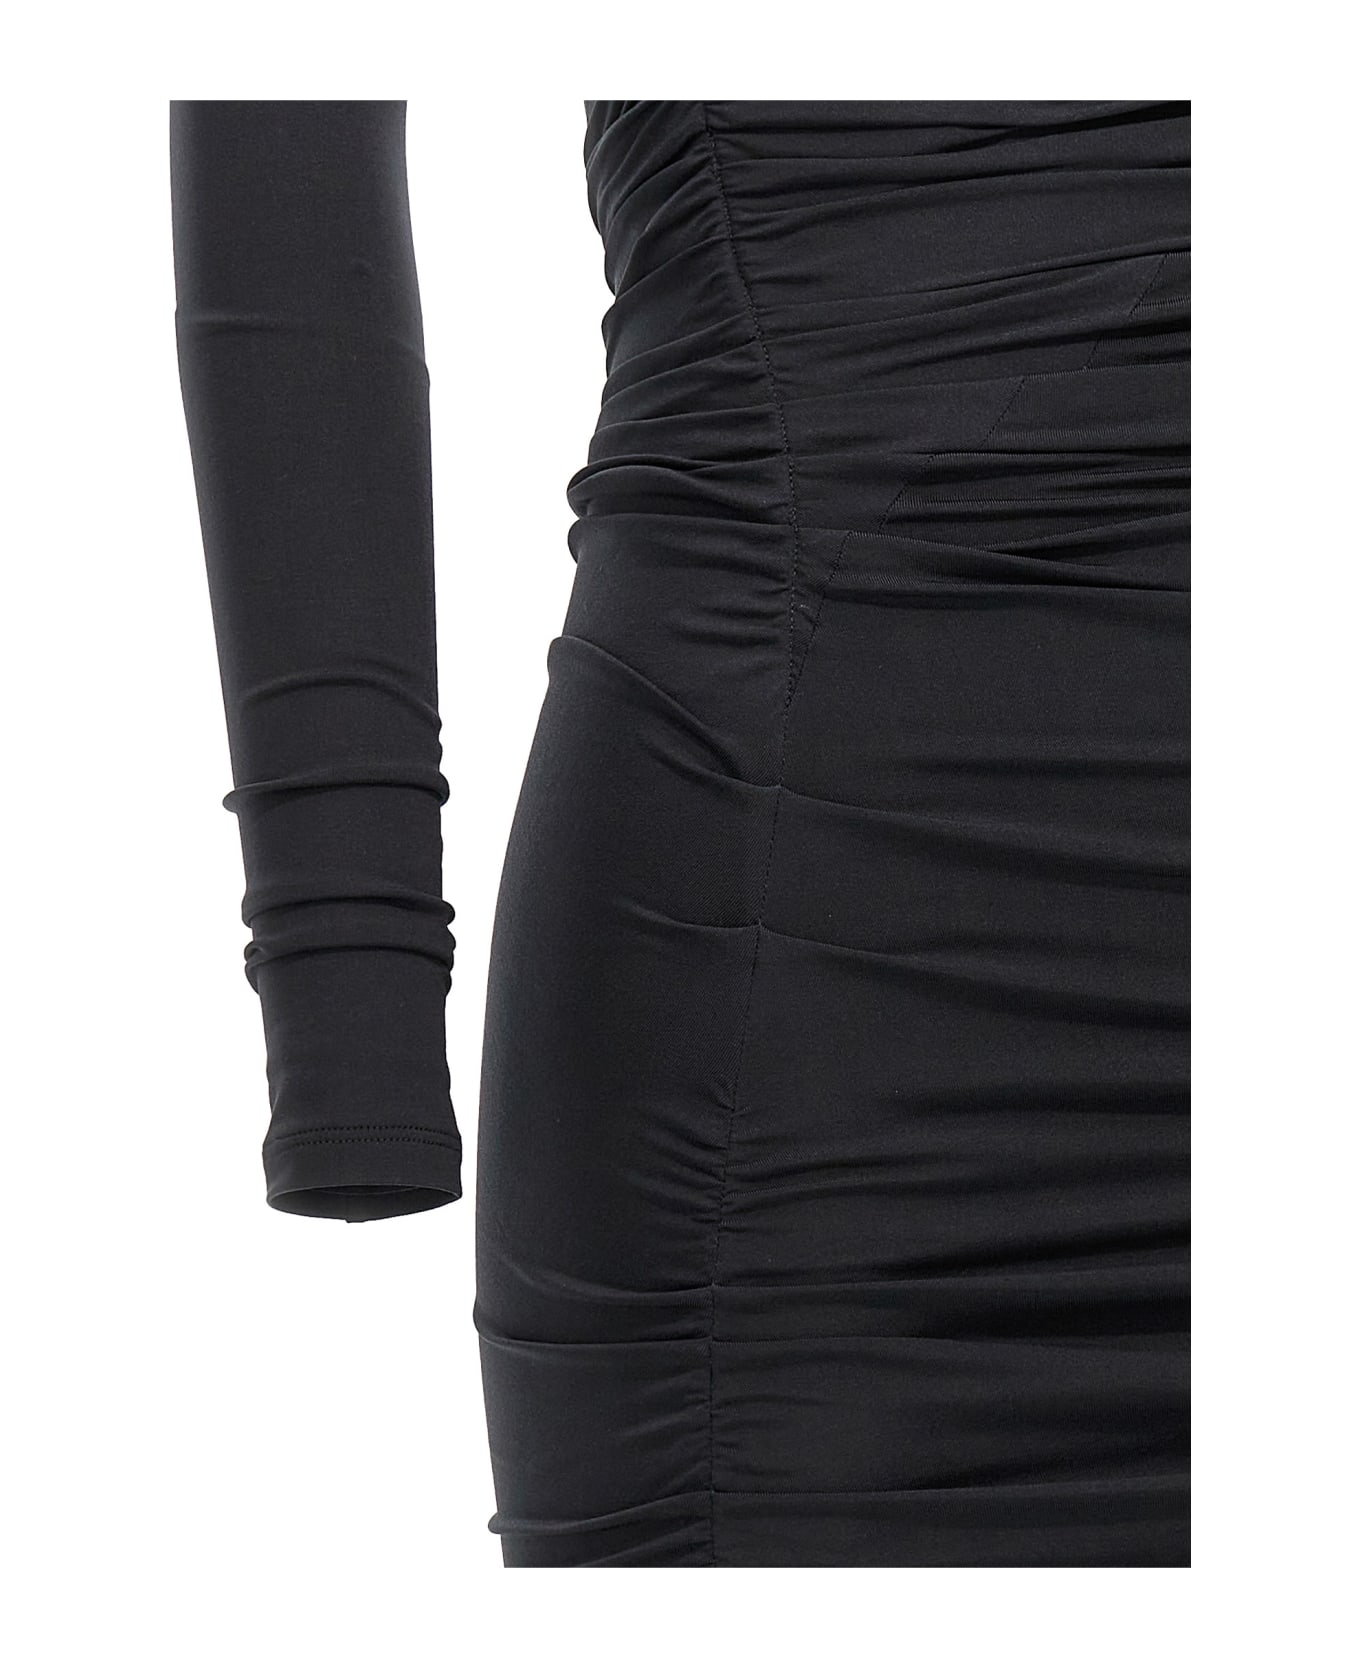 Balenciaga Twisted Dress - Black